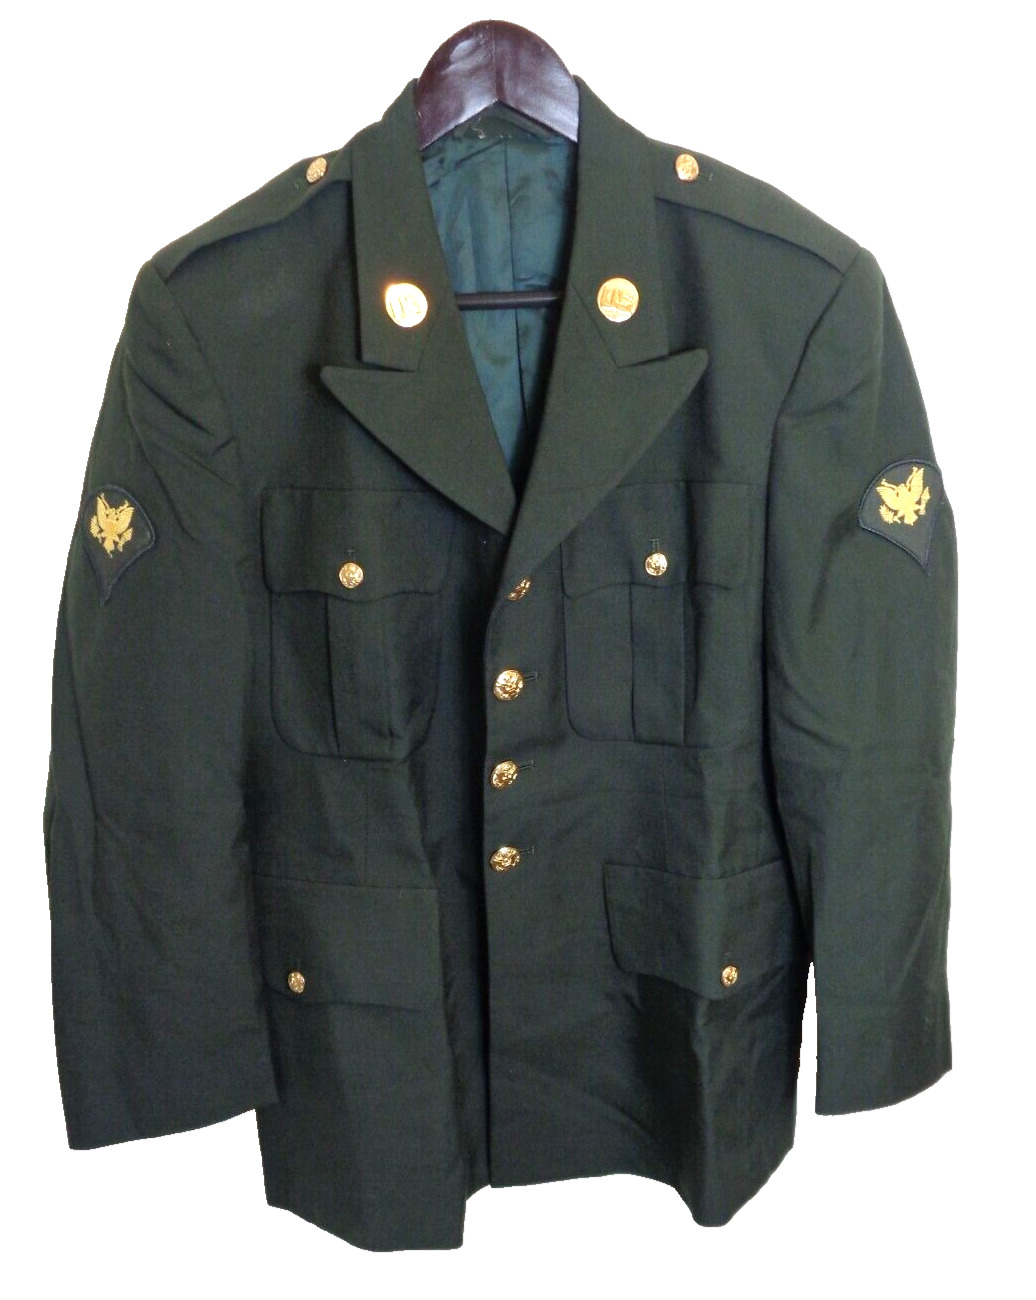 US Military Army Green Coat Sz 41S Wool/Poly Blazer Jacket Uniform Mens